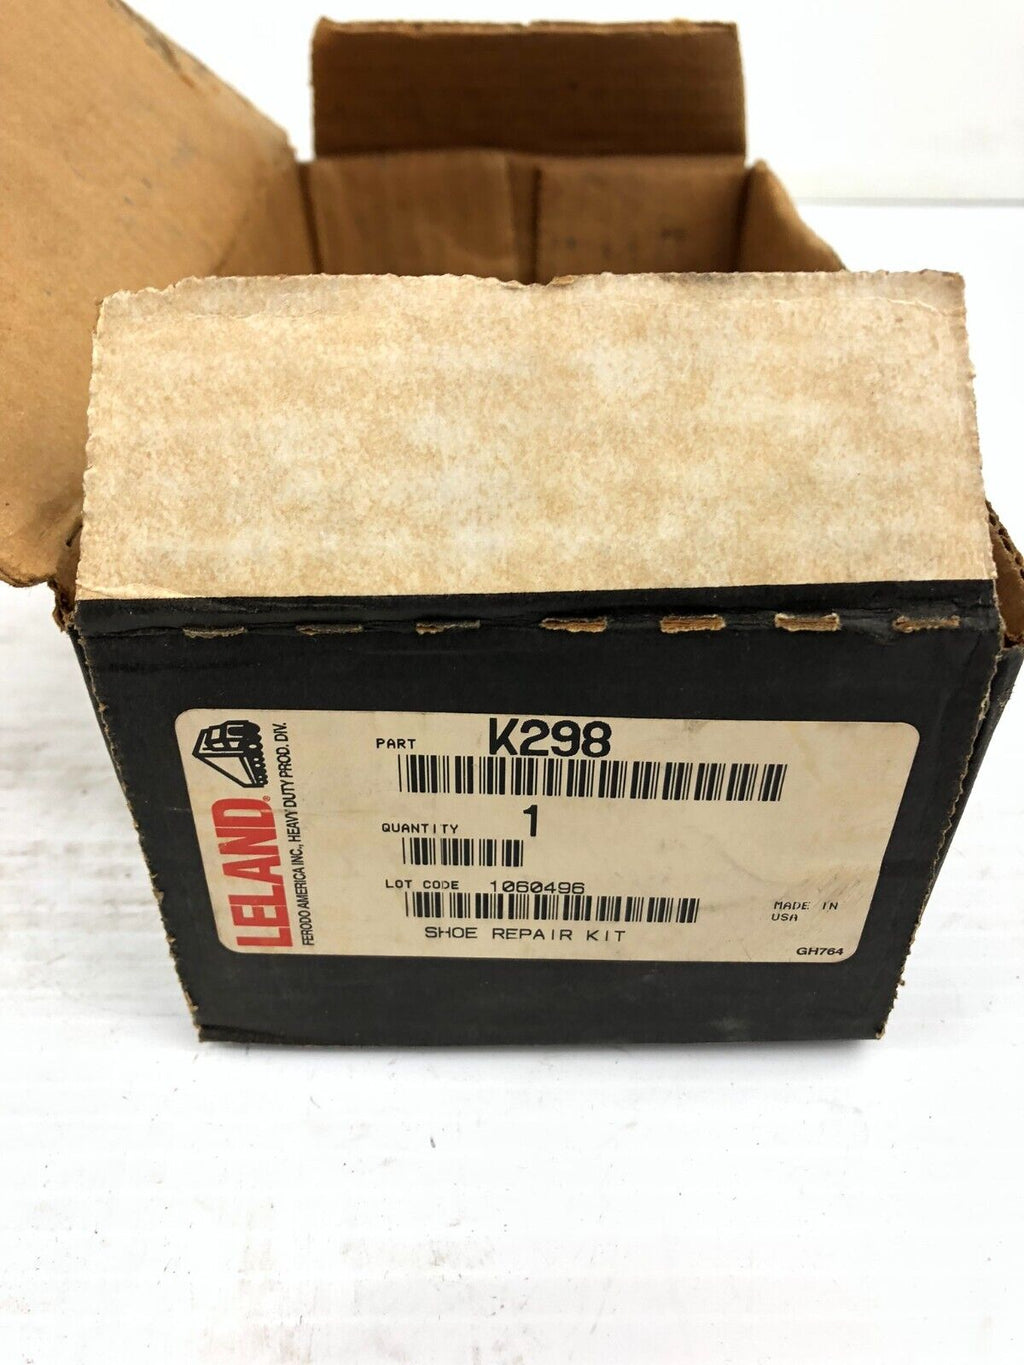 Dayton Parts 08-108273 Shoe Repair Kit Interchangable with Leland K46